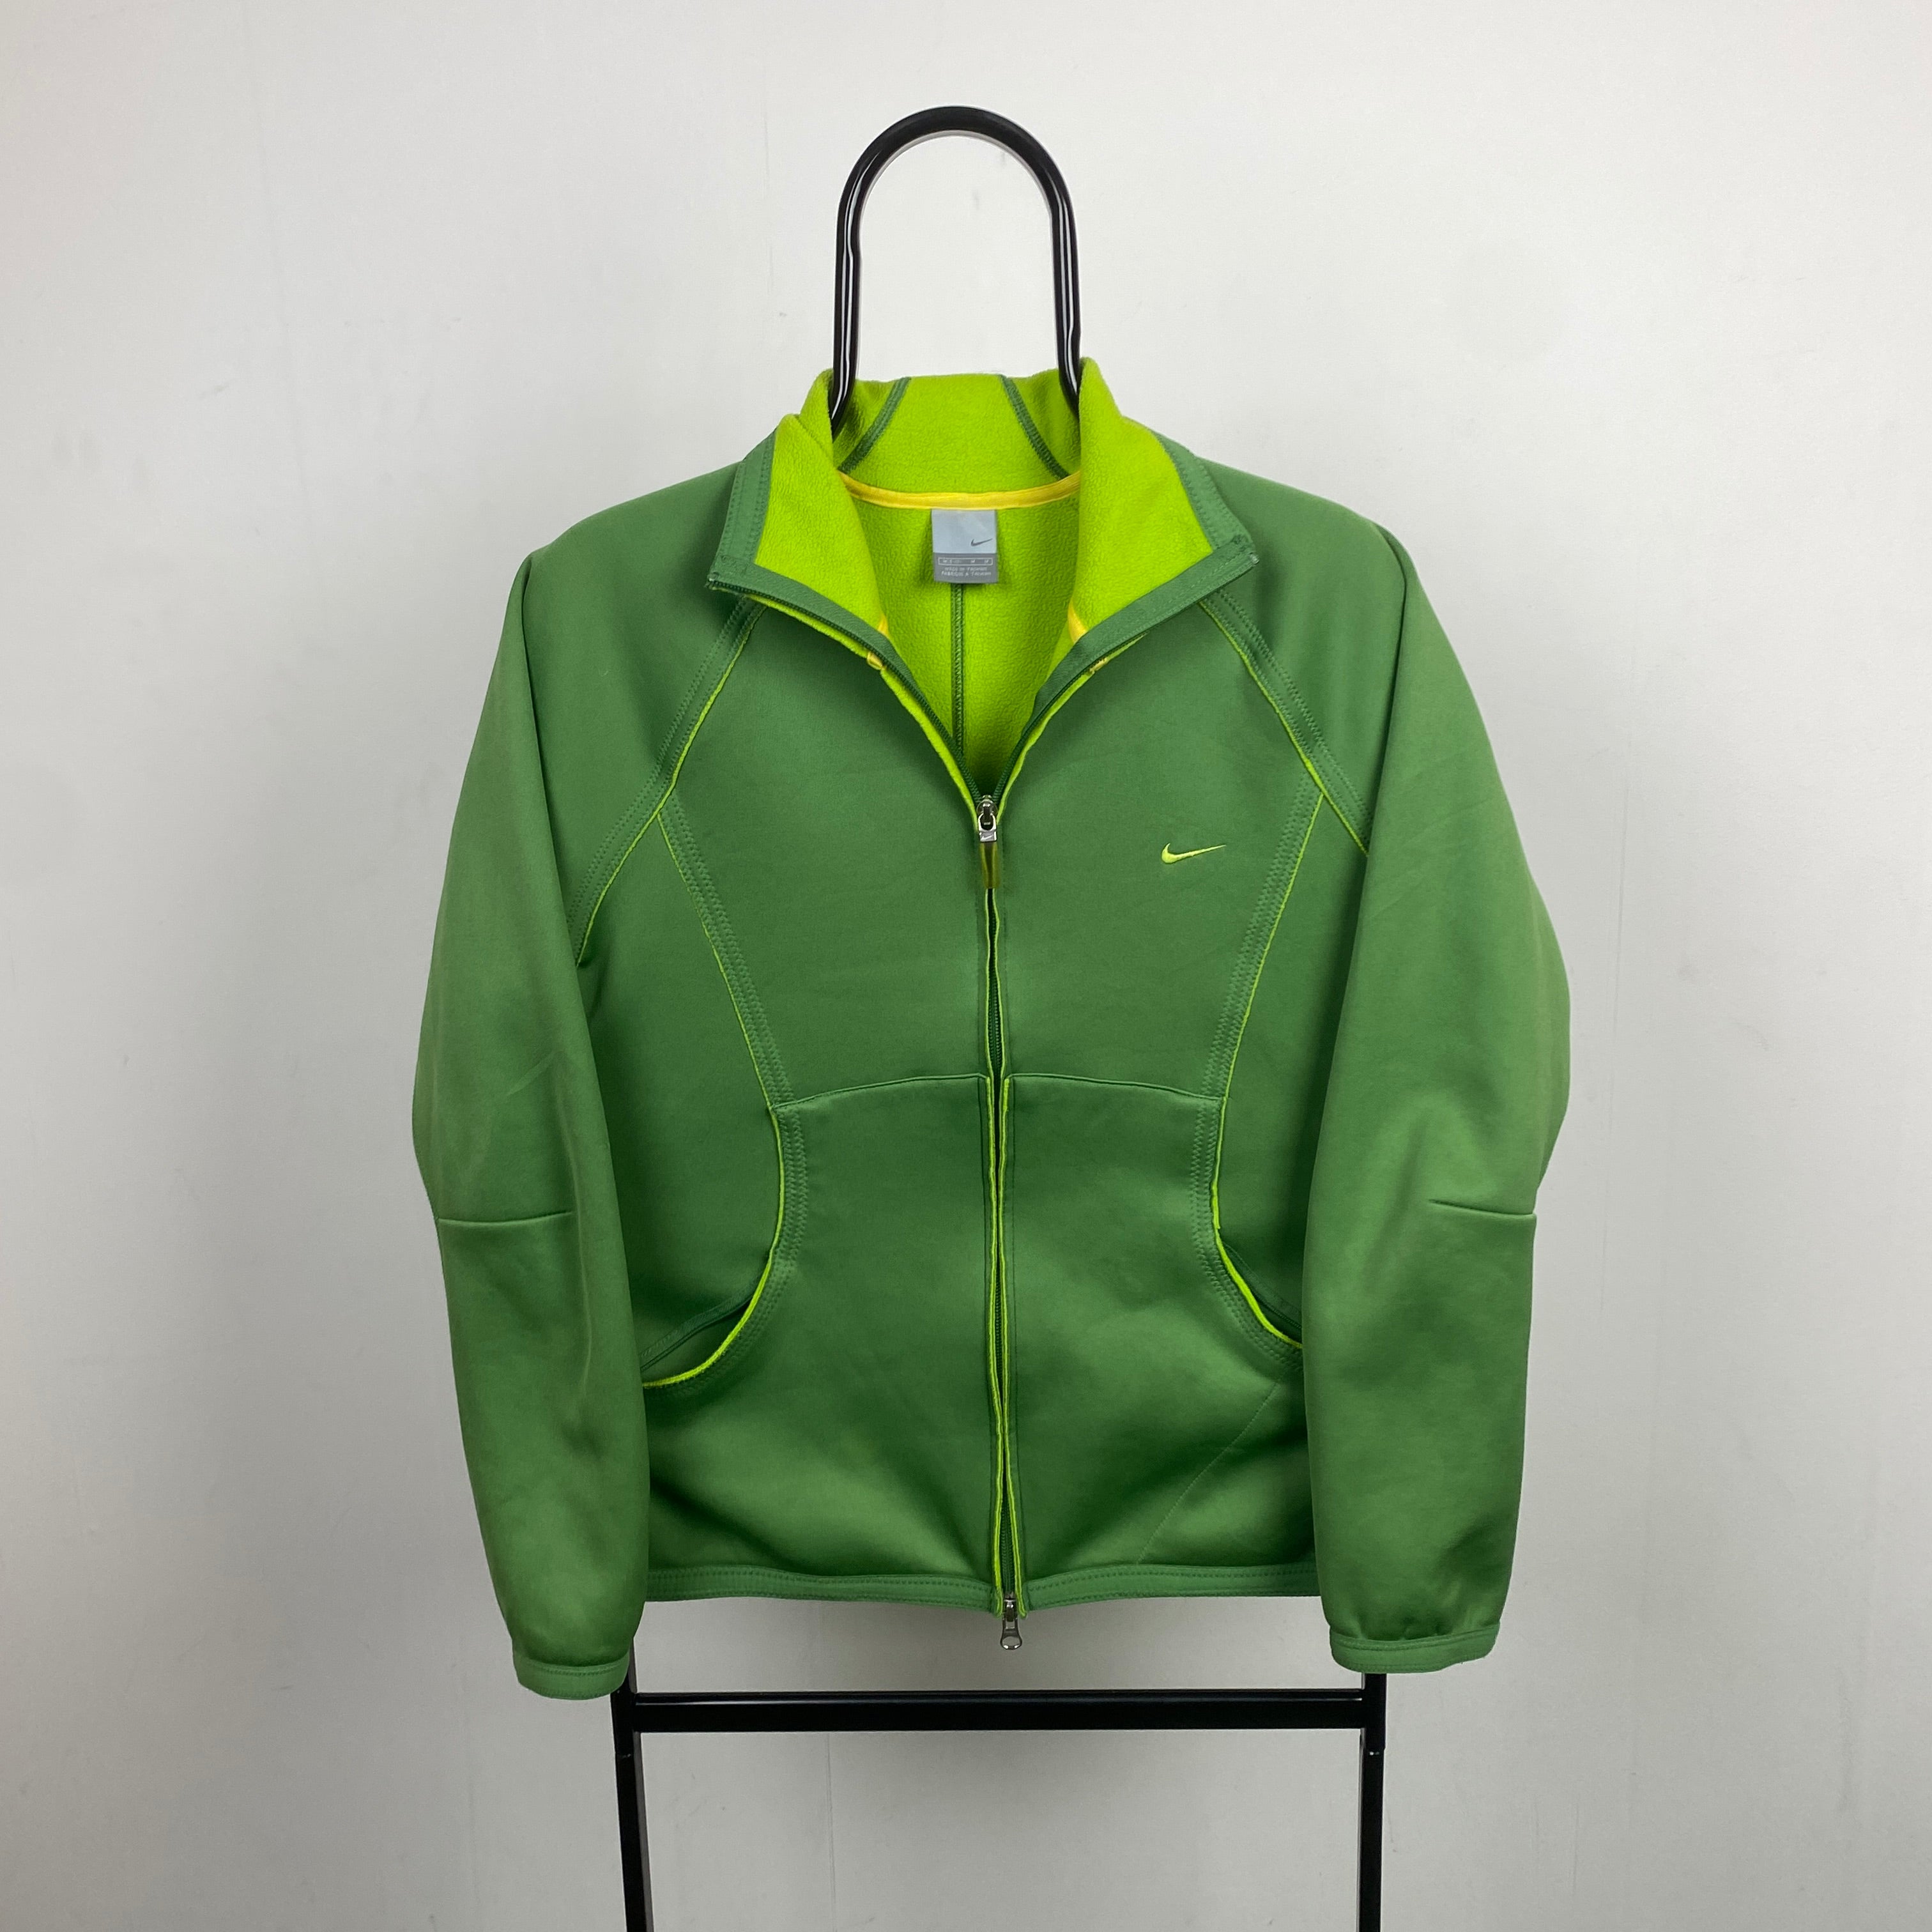 00s Nike Zip Fleece Sweatshirt Green Small/Medium